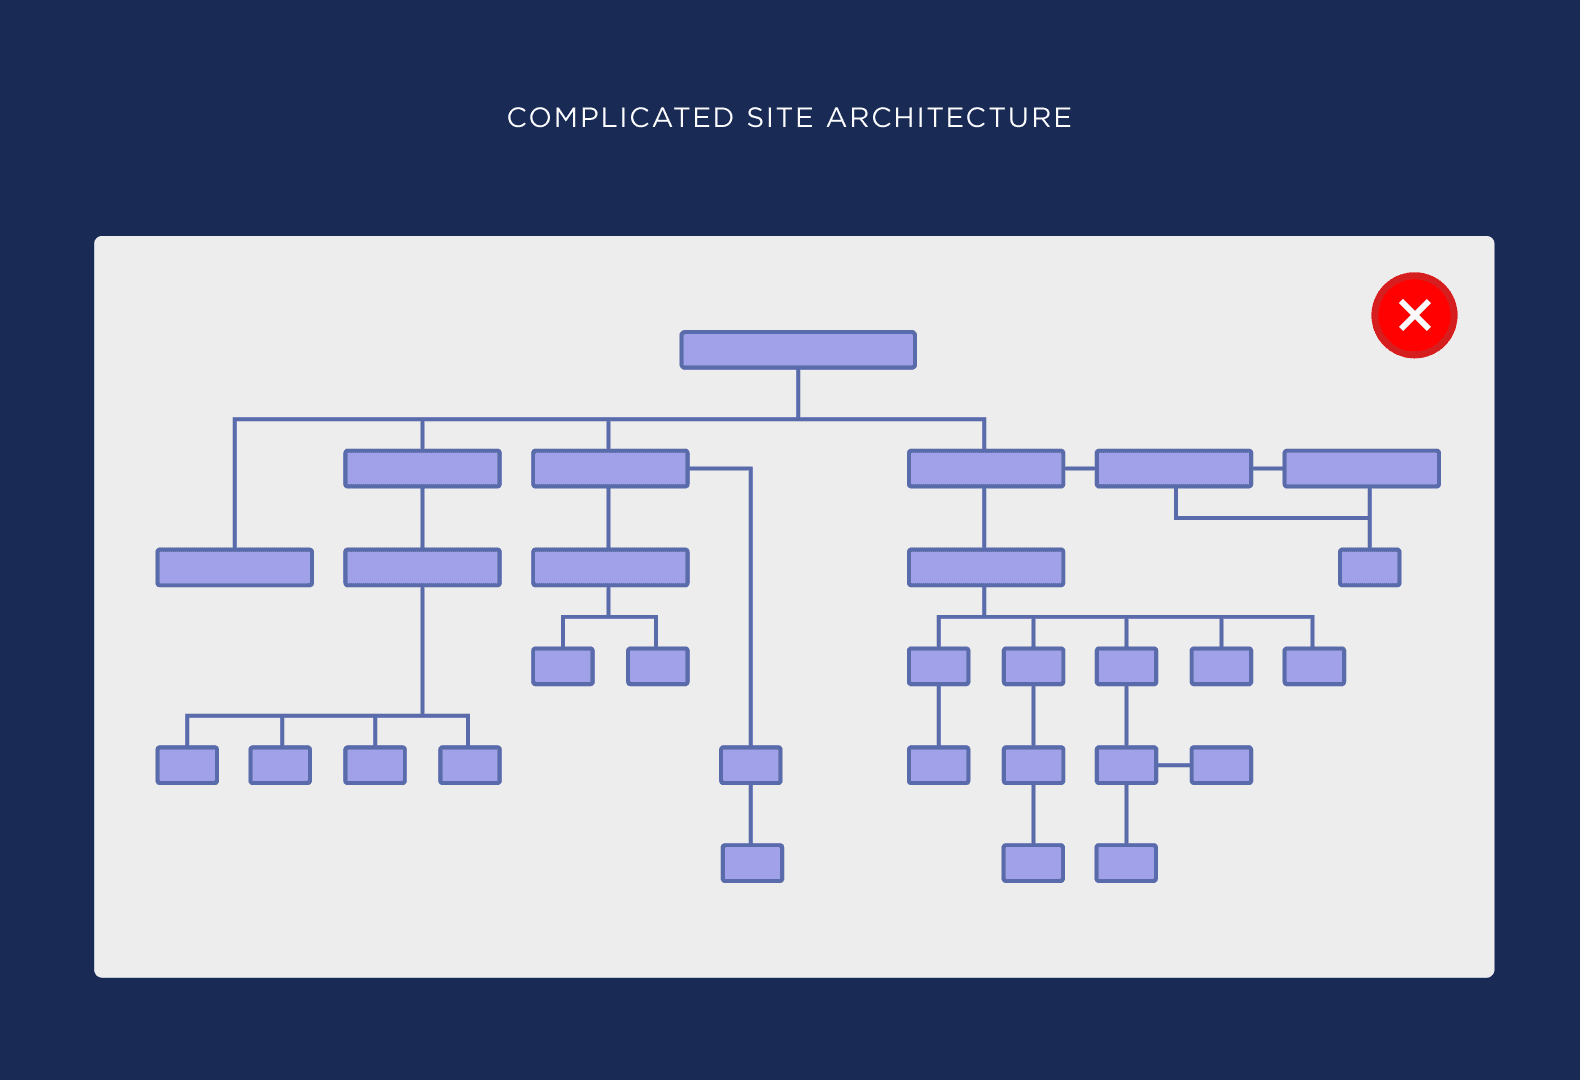 Complicated site architecture